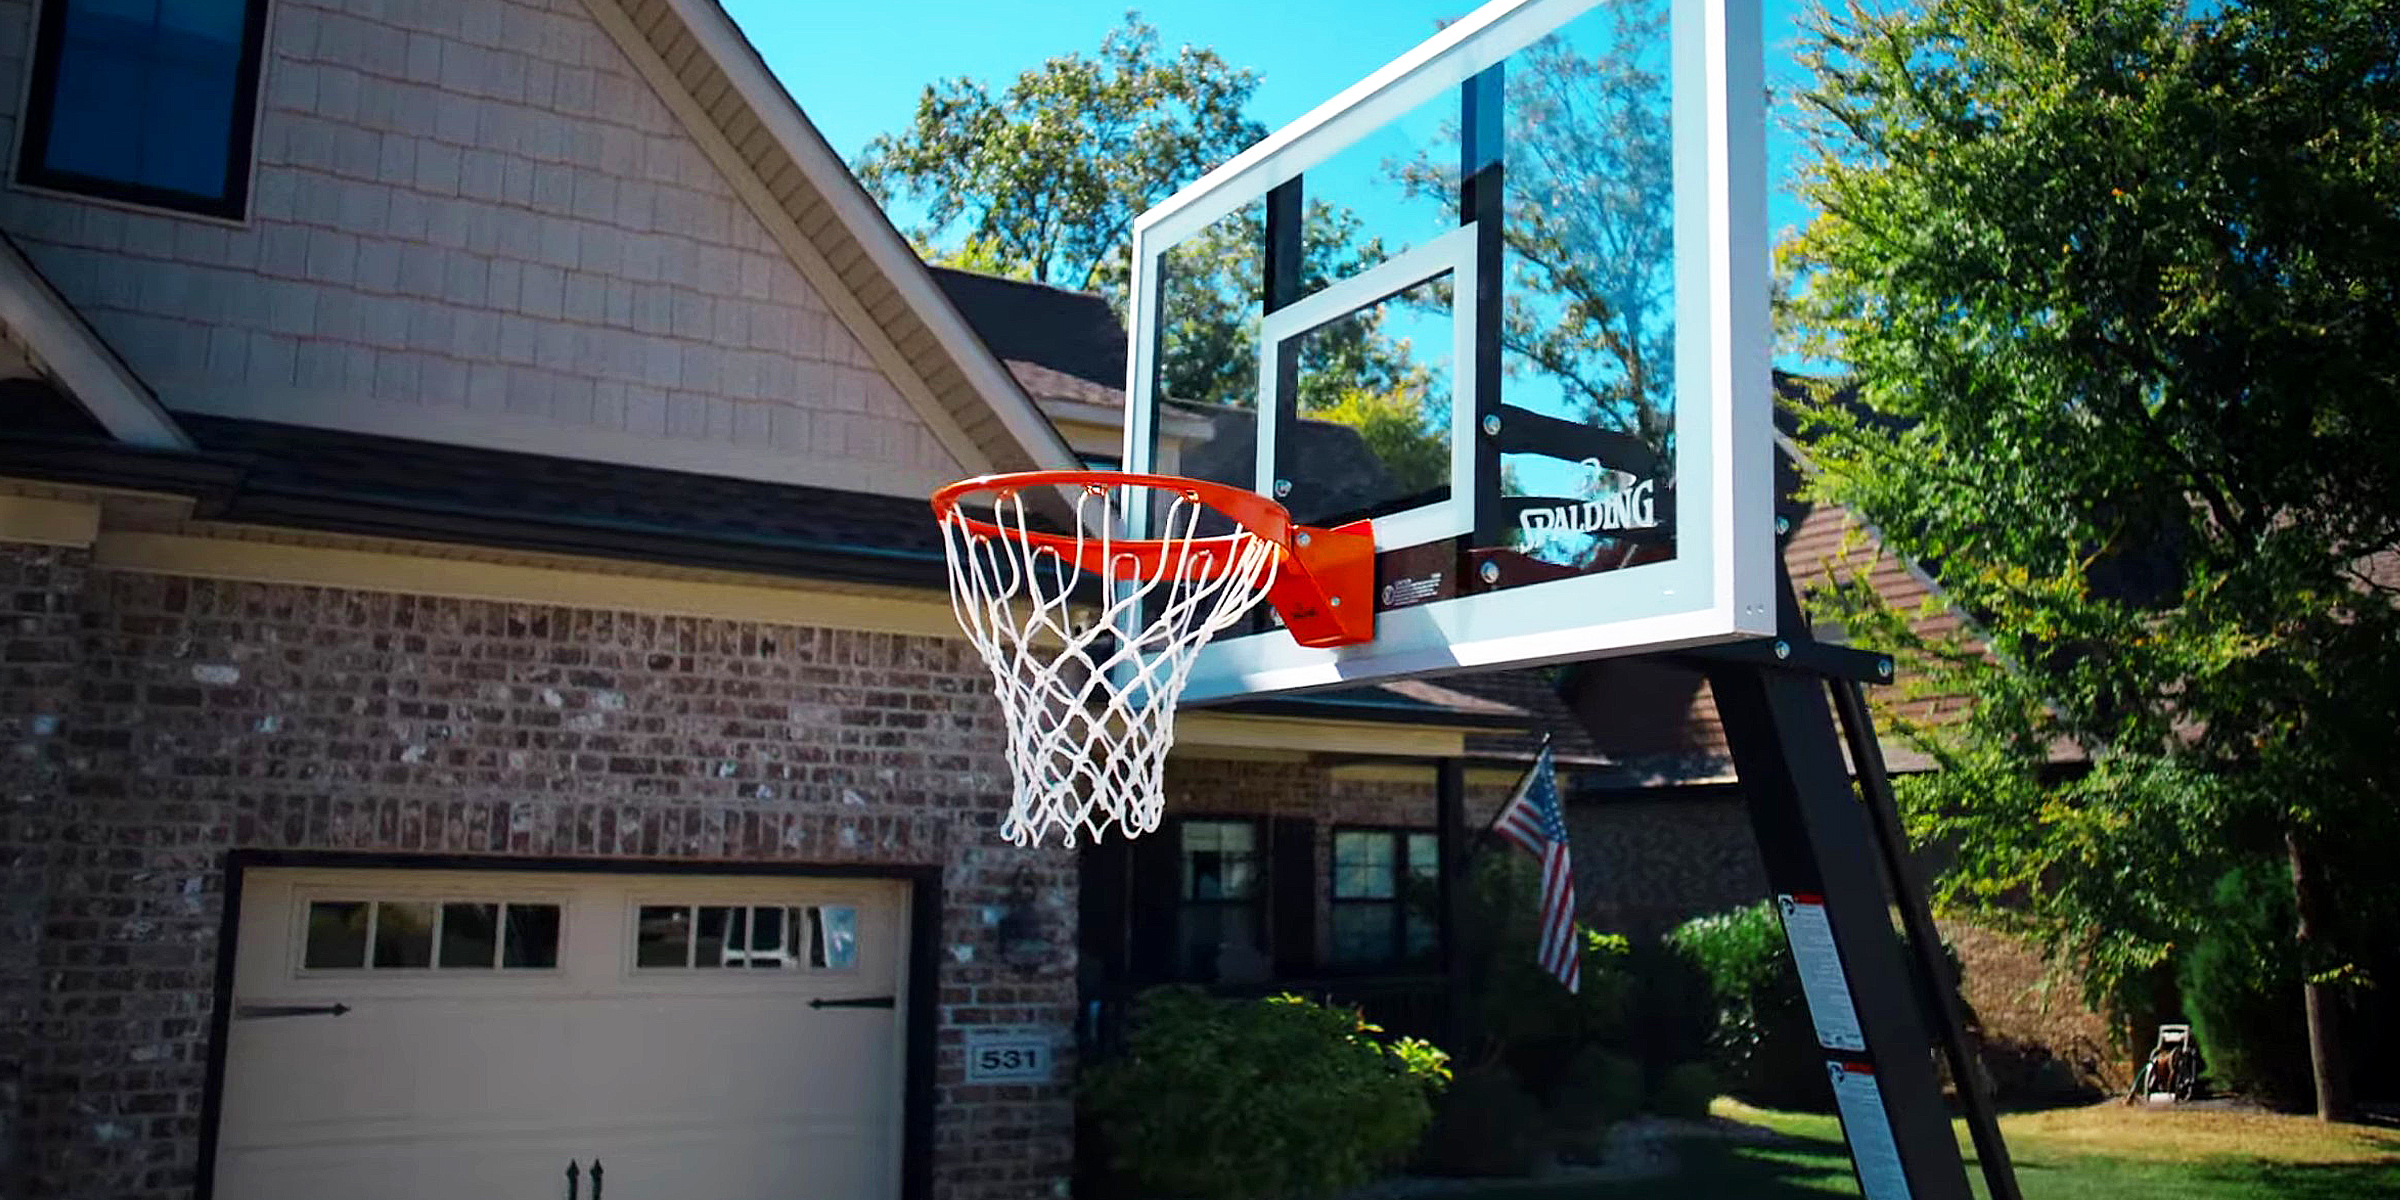 Backyard basketball court | Source: YouTube/@spalding